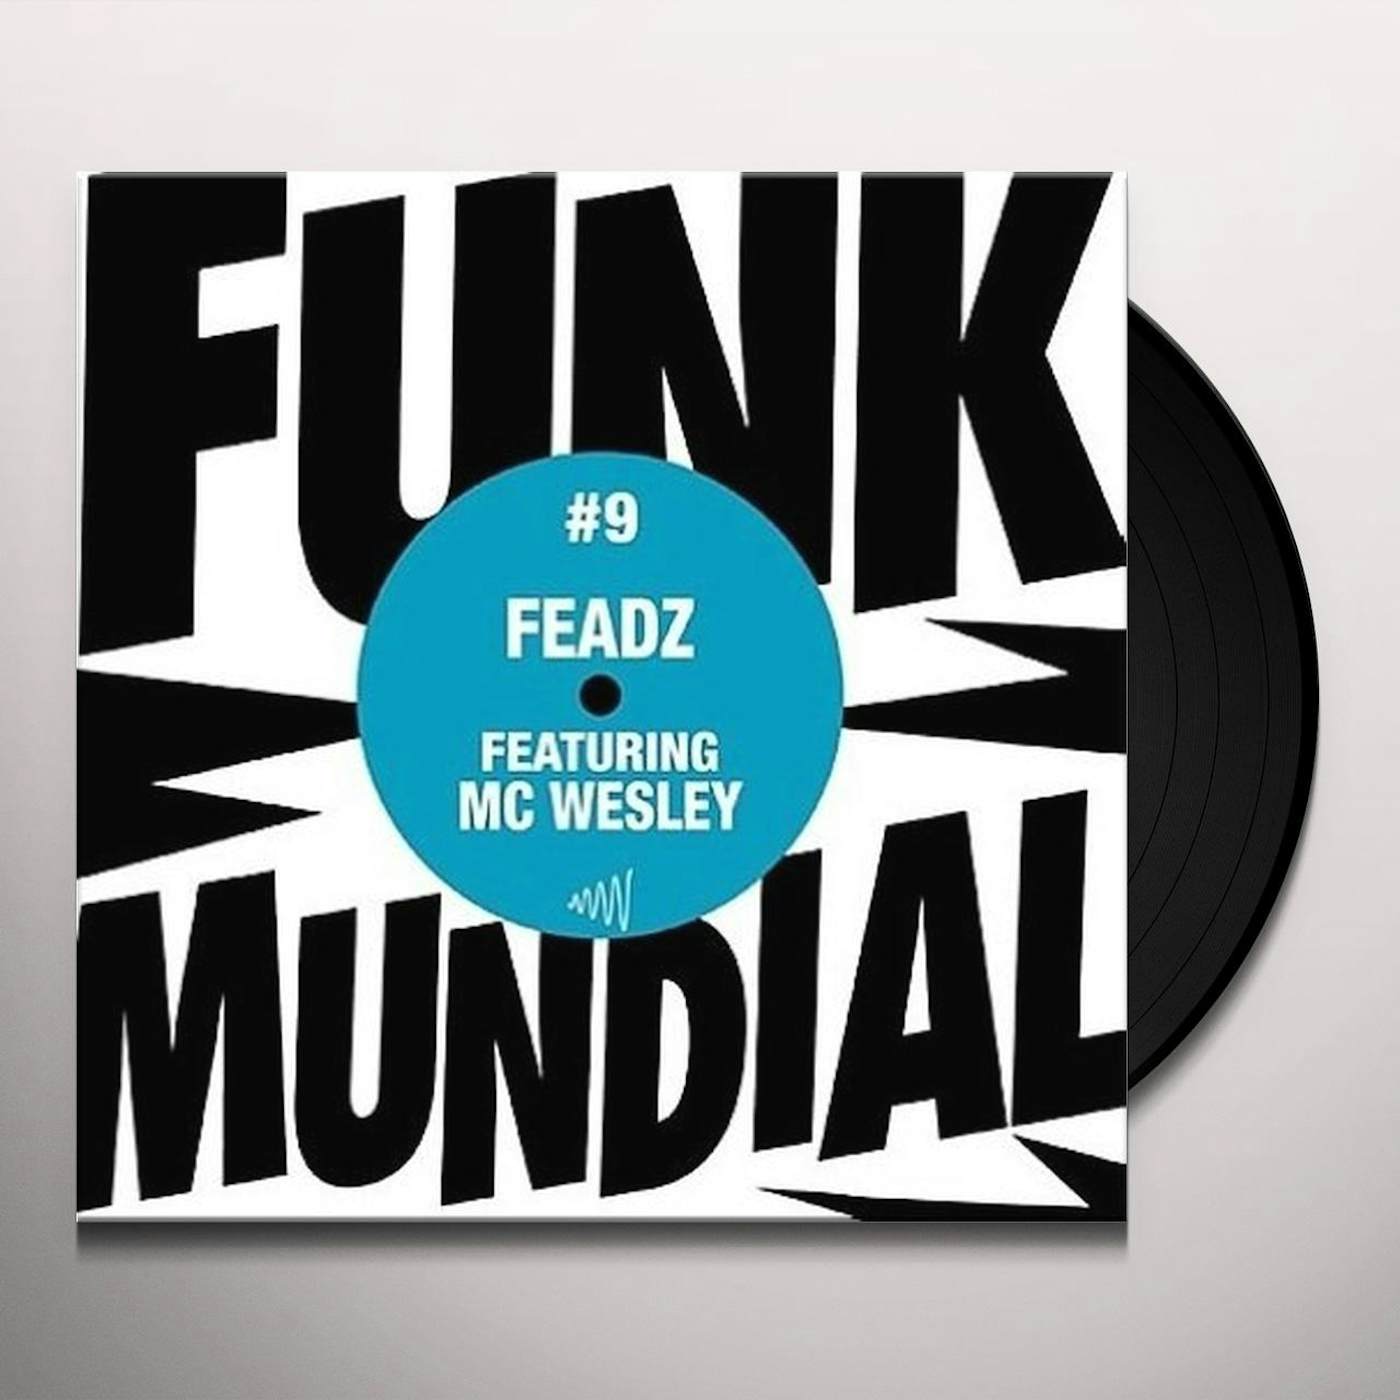 Feadz FUNK MUNDIAL #9 Vinyl Record